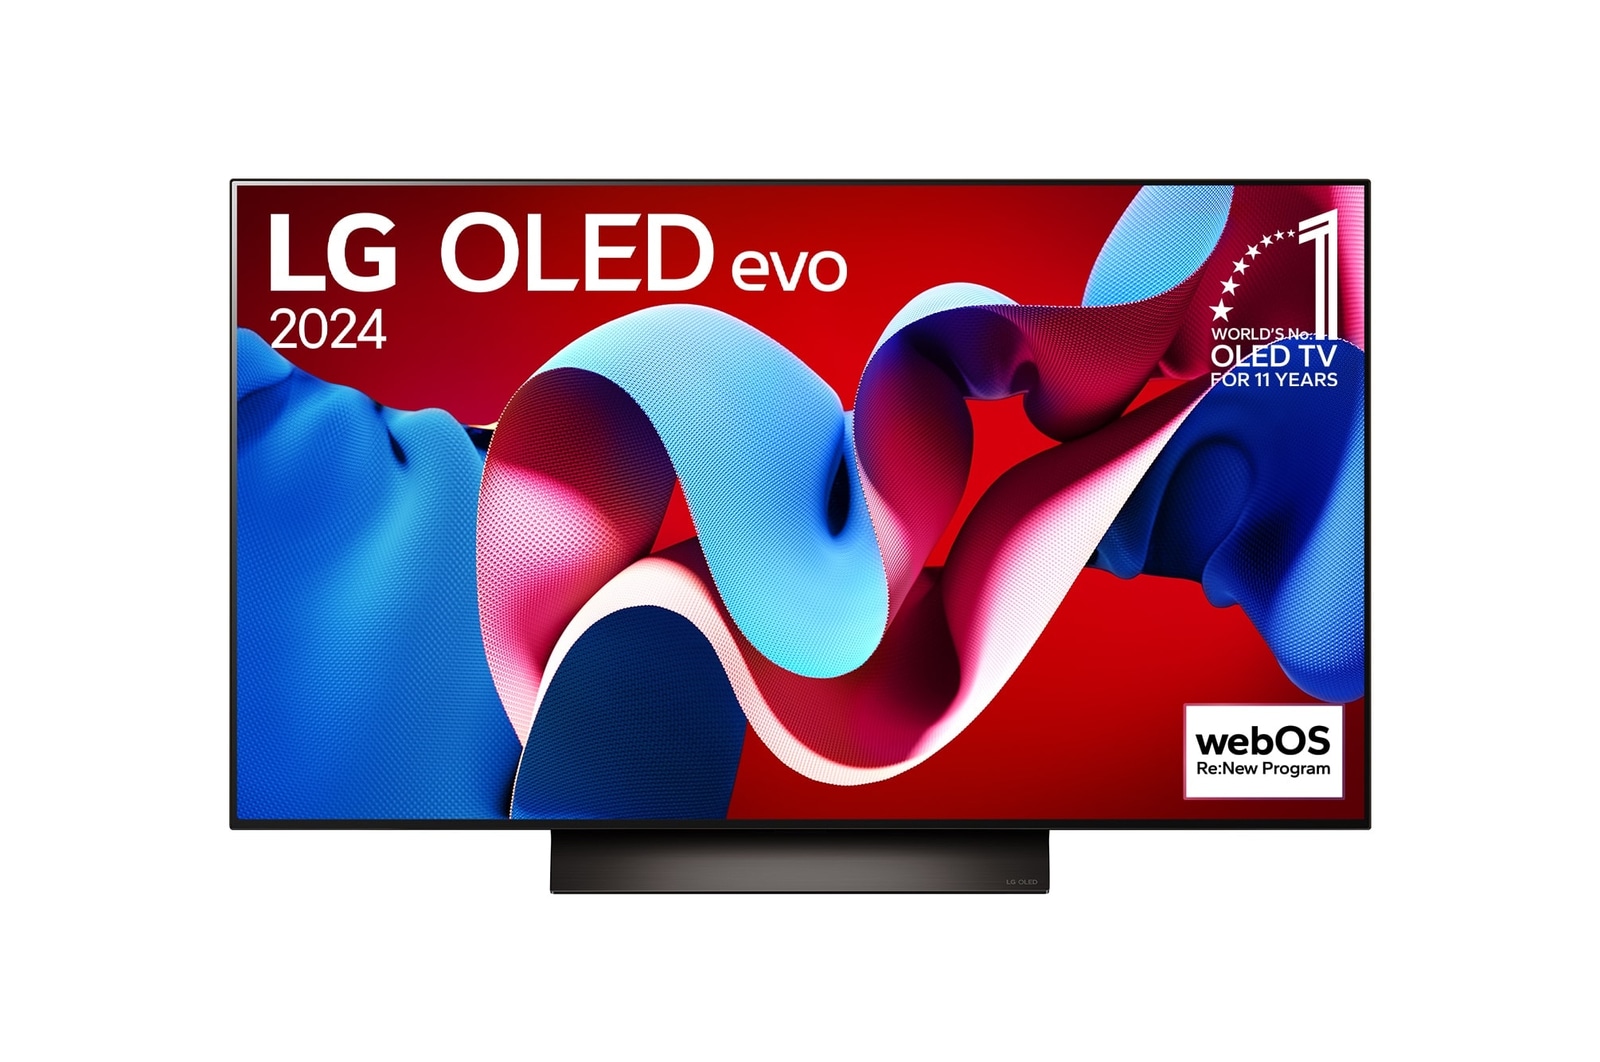 LG OLED evo C4 TV, OLED48C4PUA, with 11 Years of world number 1 OLED Emblem and webOS Re:New Program logo on screen